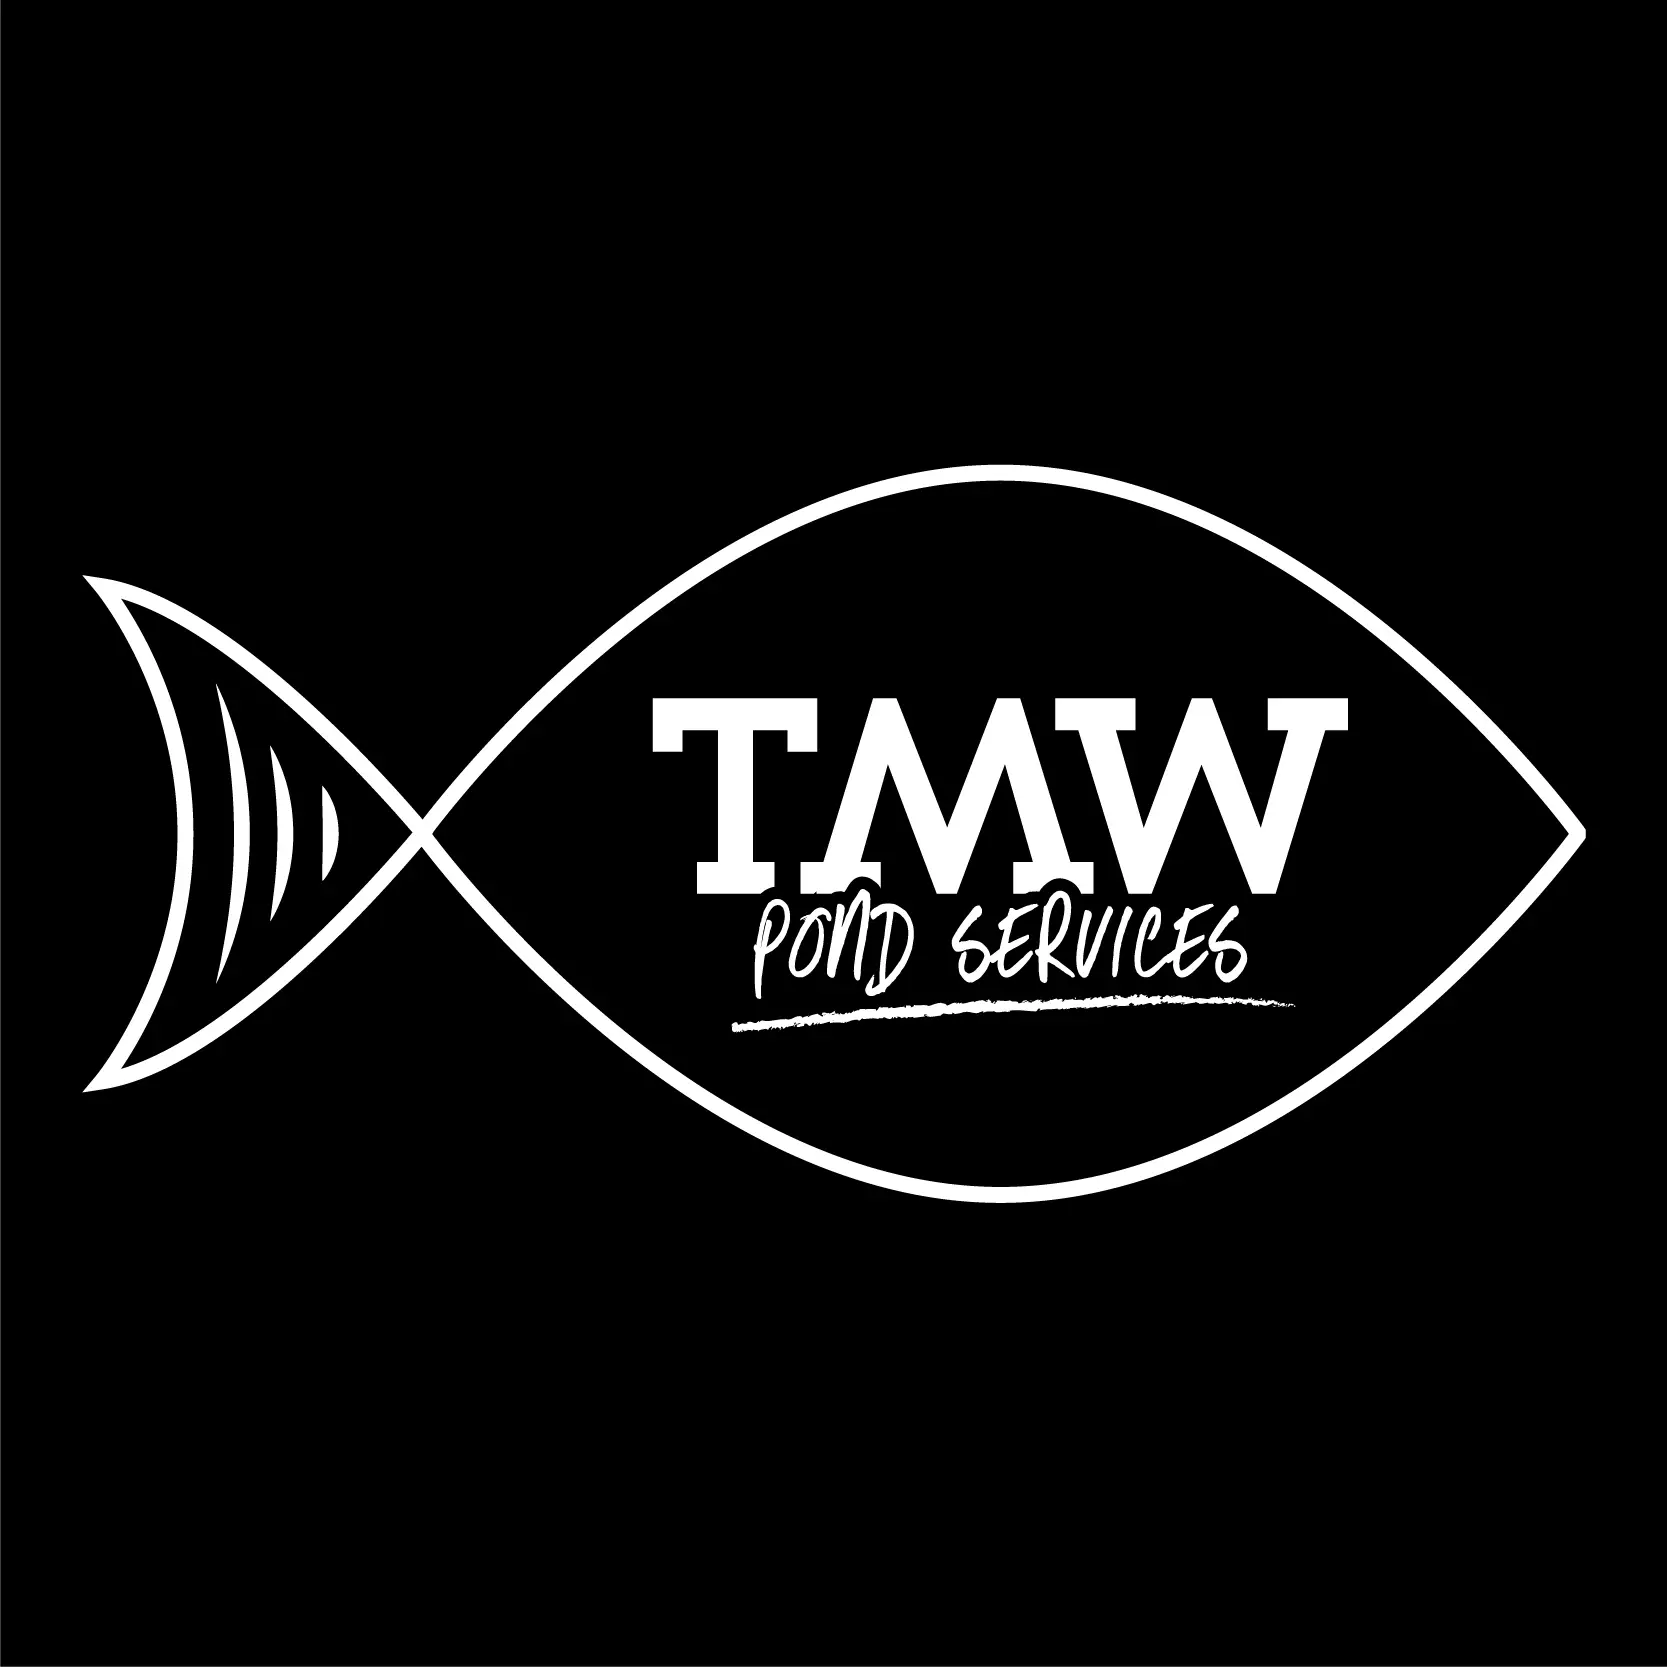 TMW Pond Services Reversed